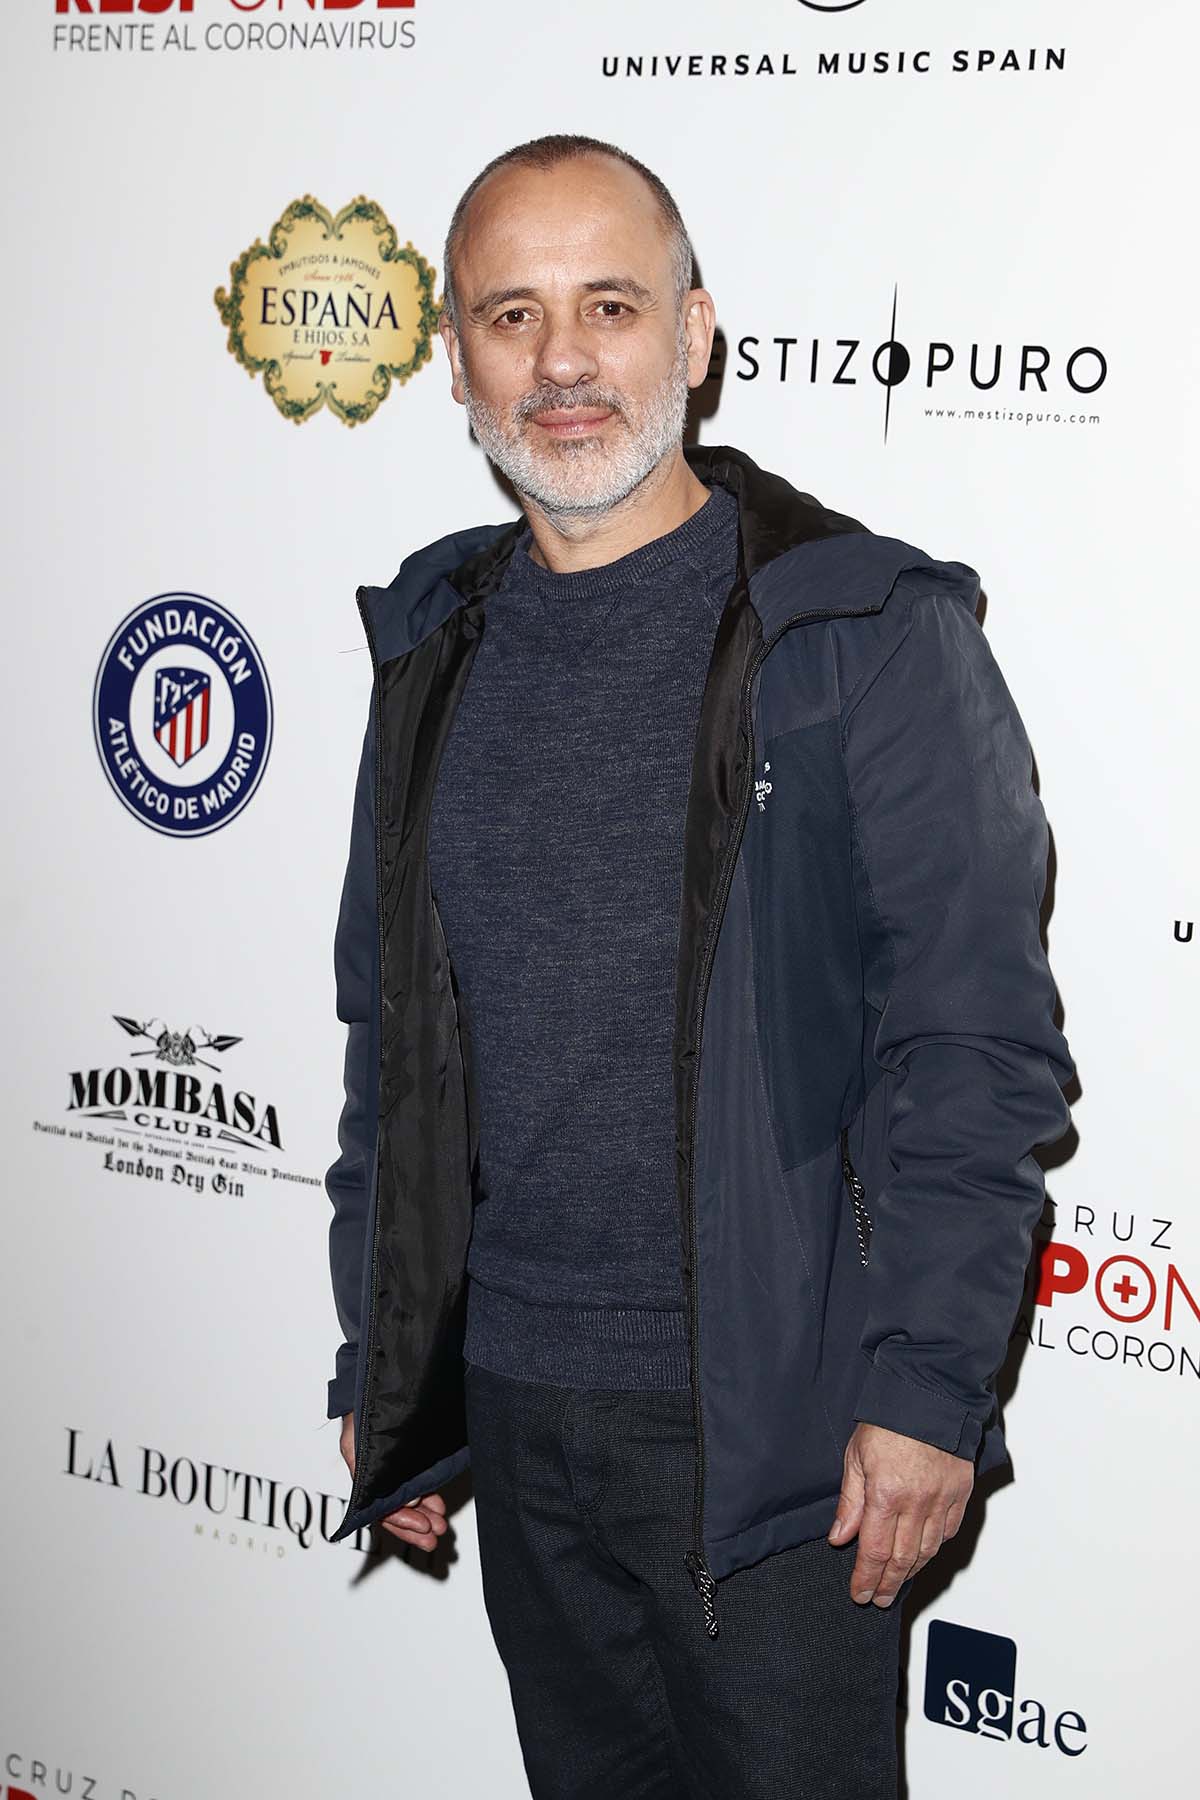 Javier Gutierrez during premiere Alegria de vivir videoclip in Madrid on Friday, 18 December 2020.